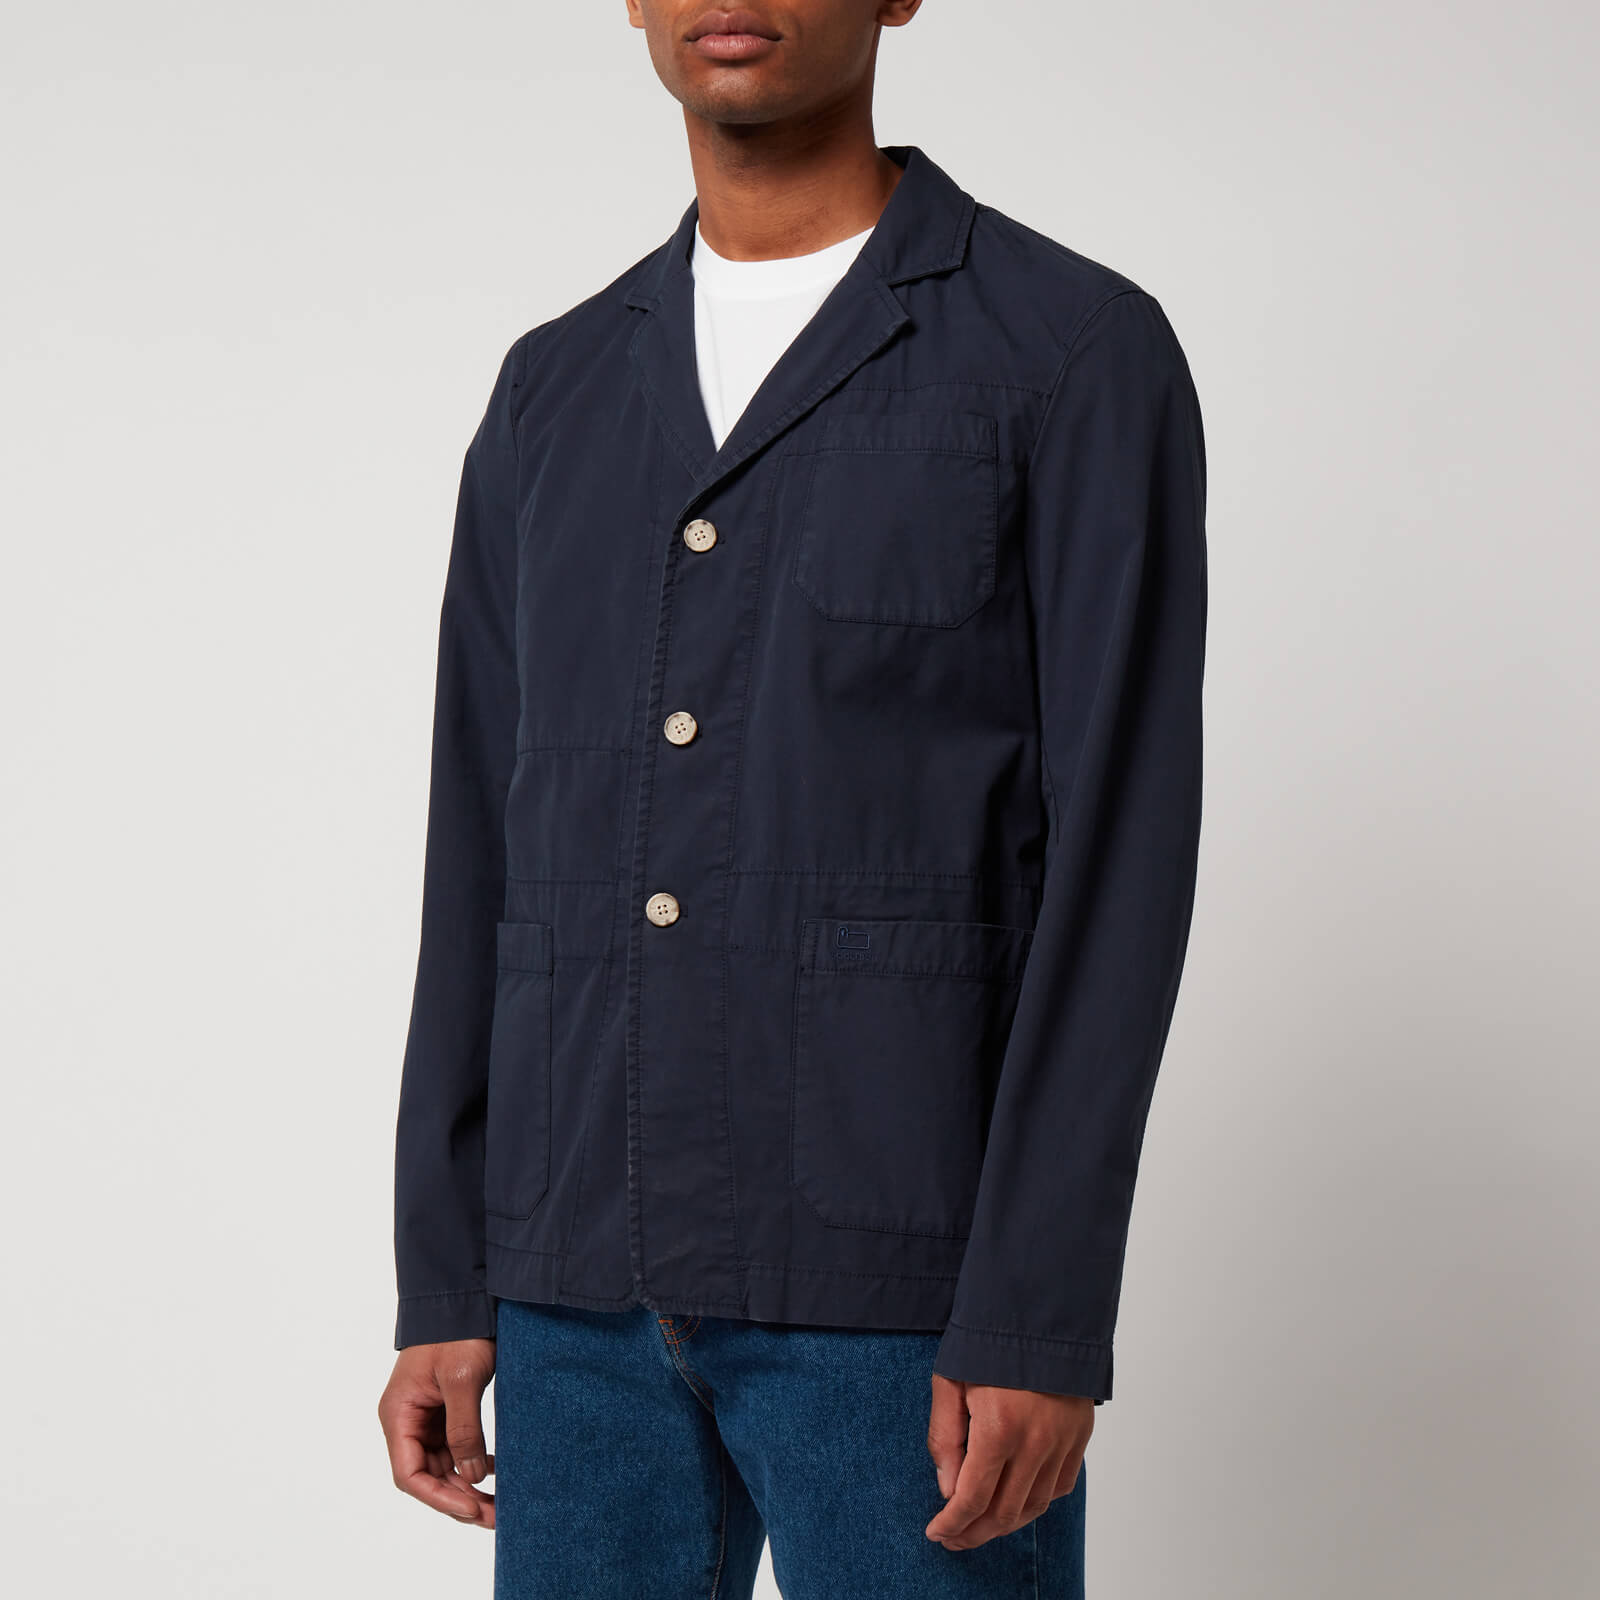 Woolrich Men's Military Cotton Blazer - Melton Blue - S